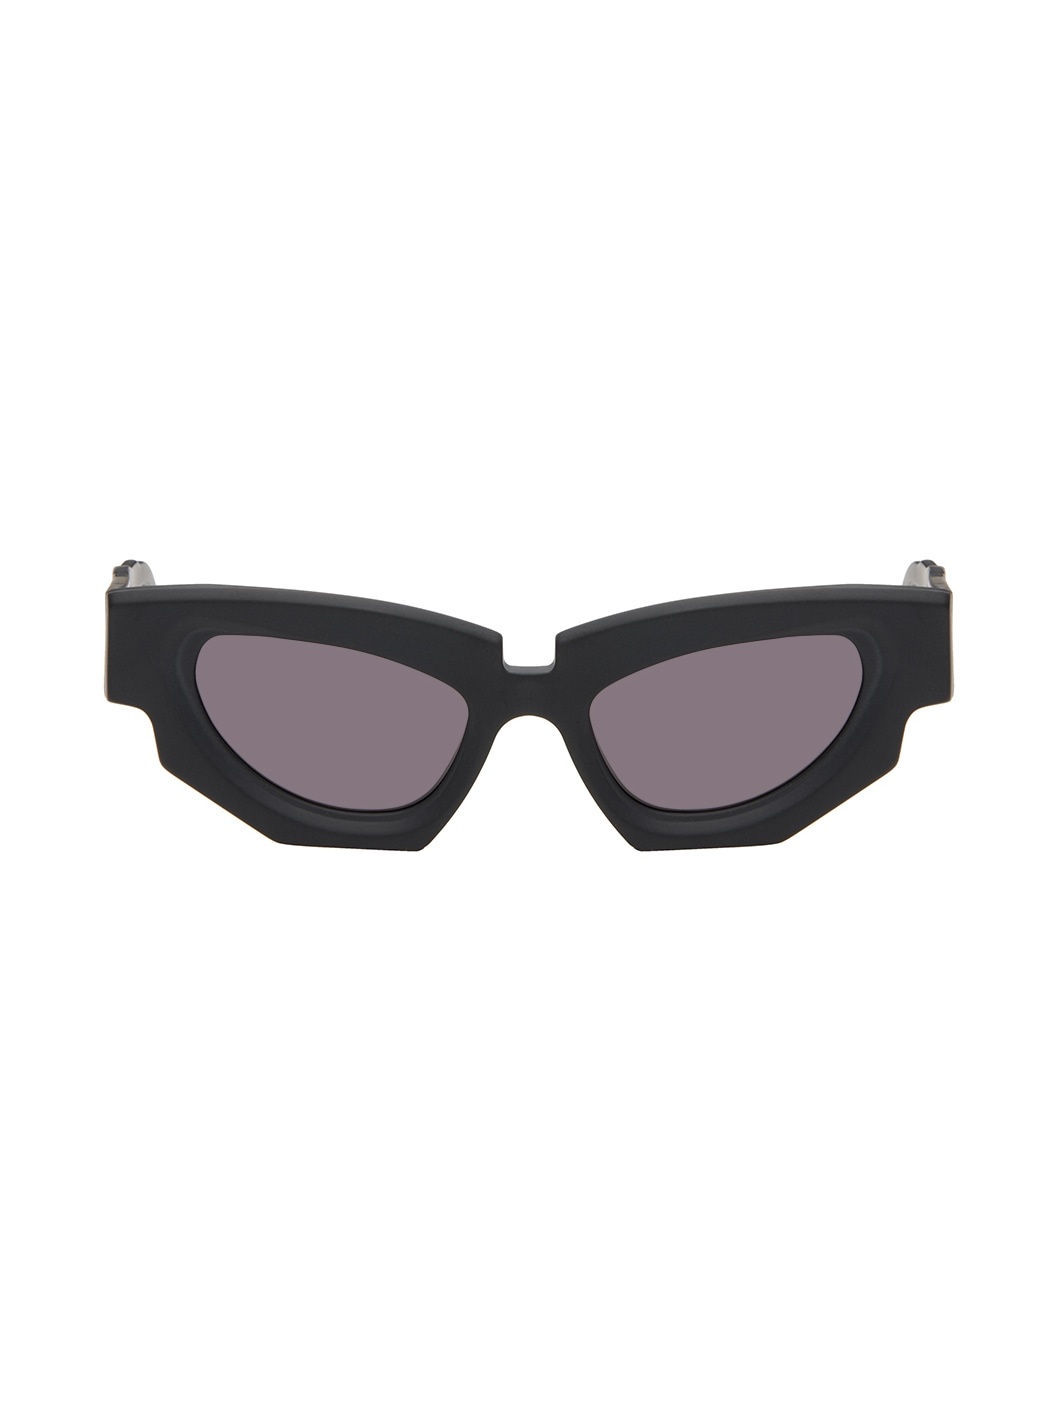 Black F5 Sunglasses - 1